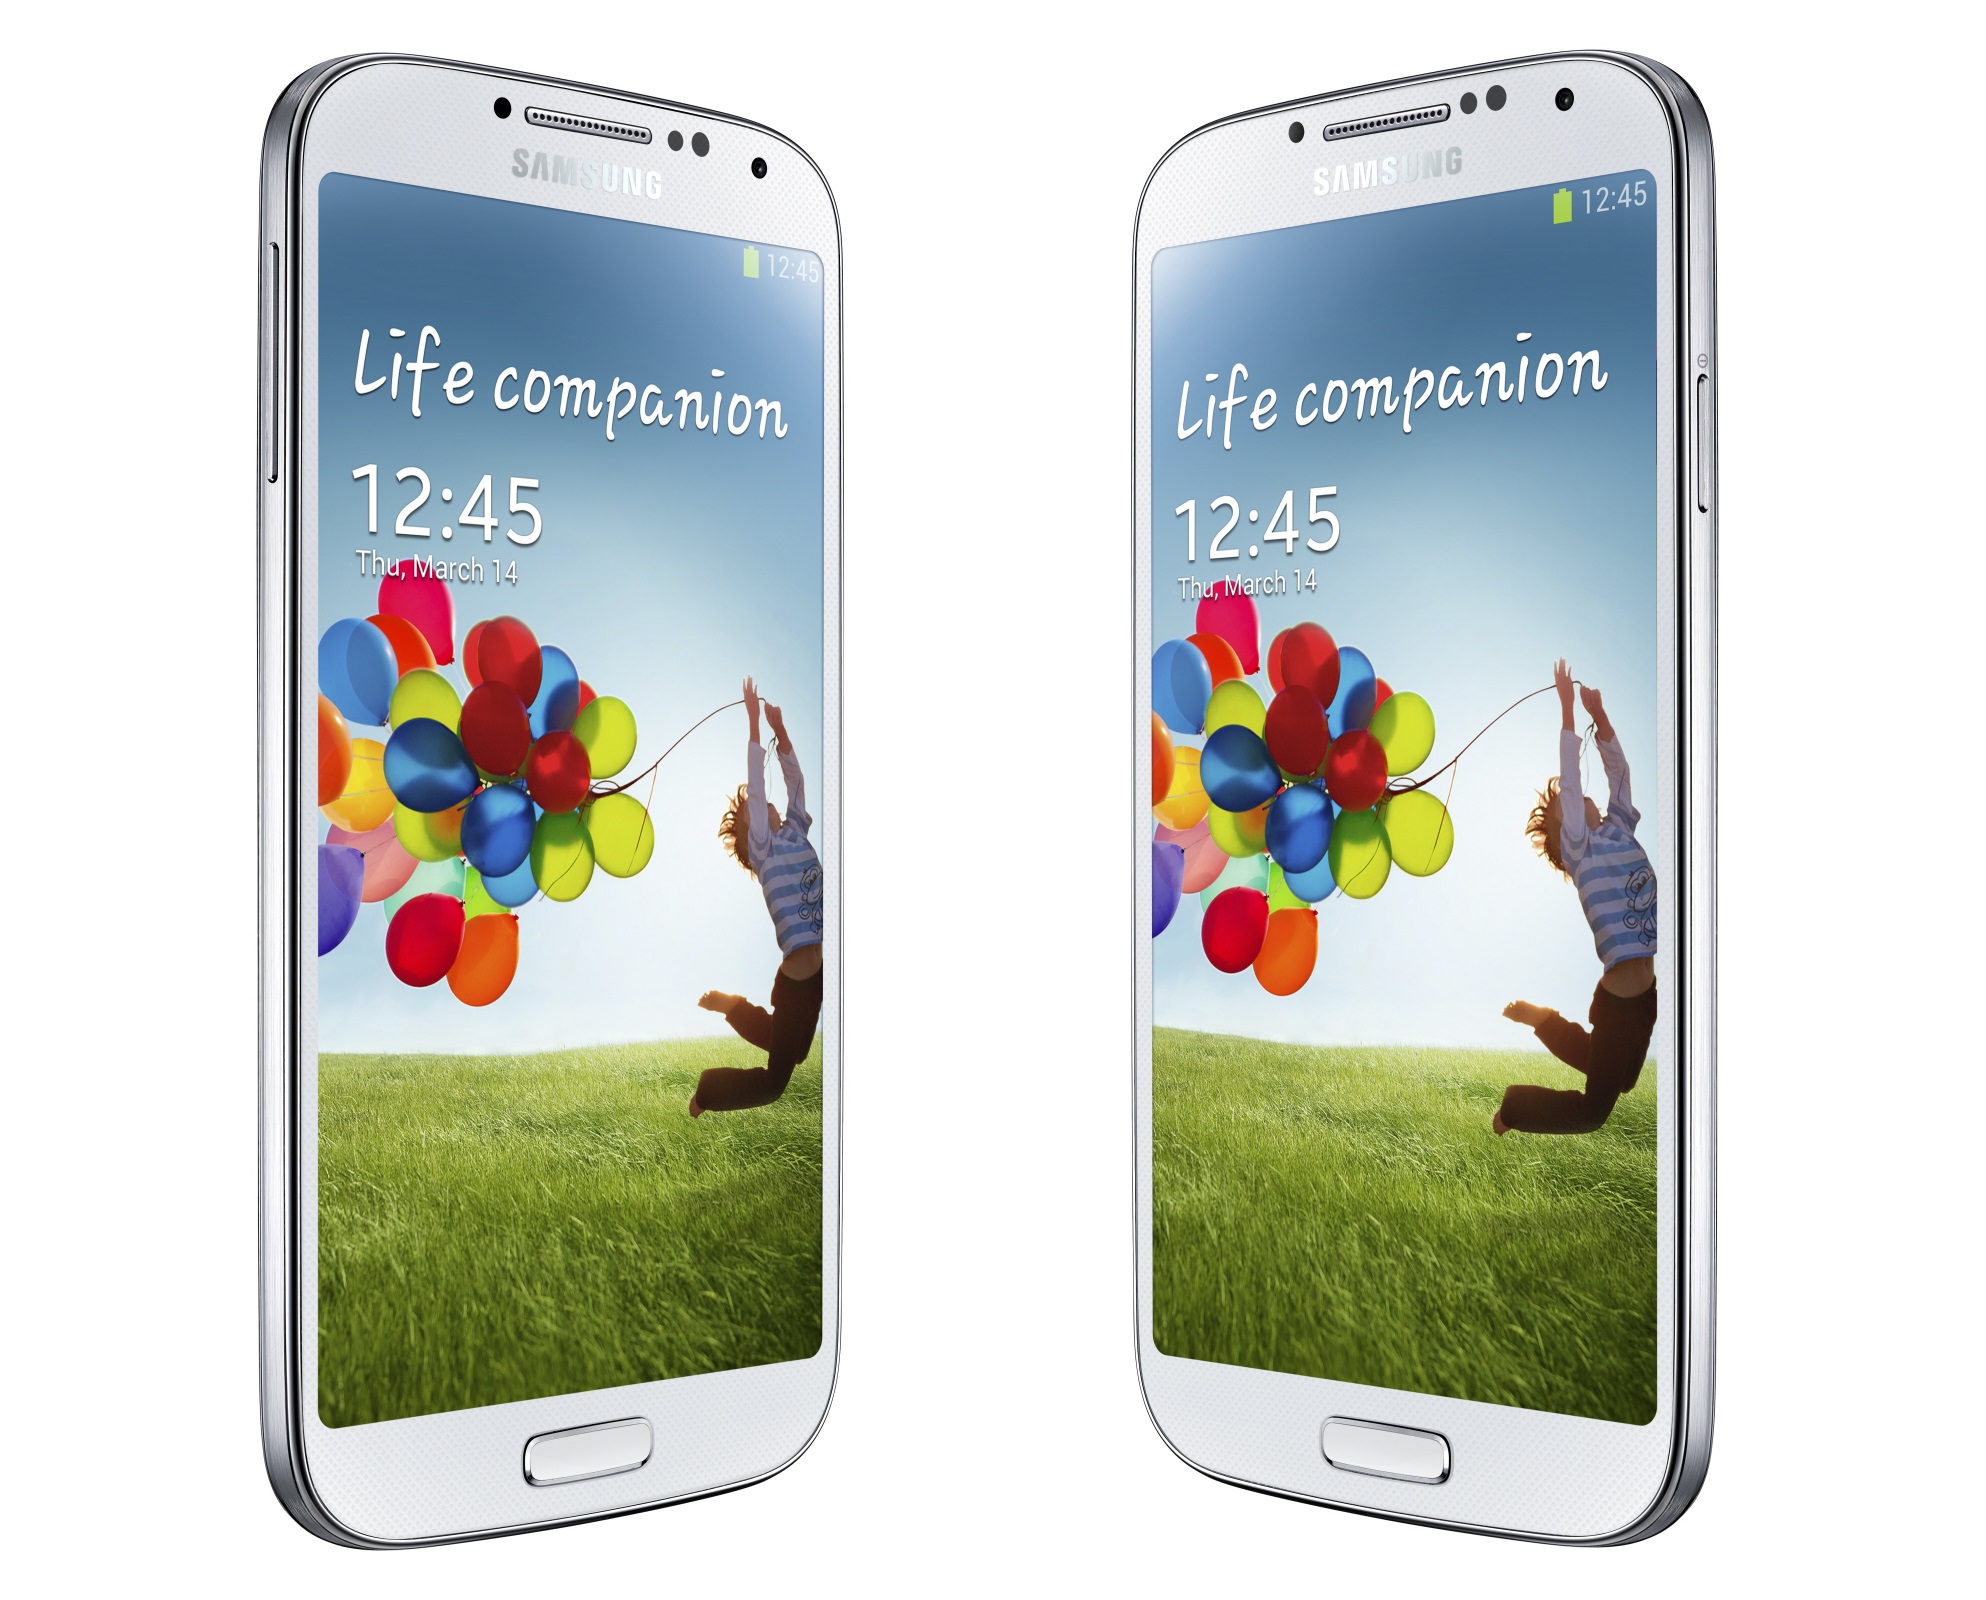 Samsung Galaxy S4 GT-I9500 16GB Smartphone I9500-BLACK B&H Photo